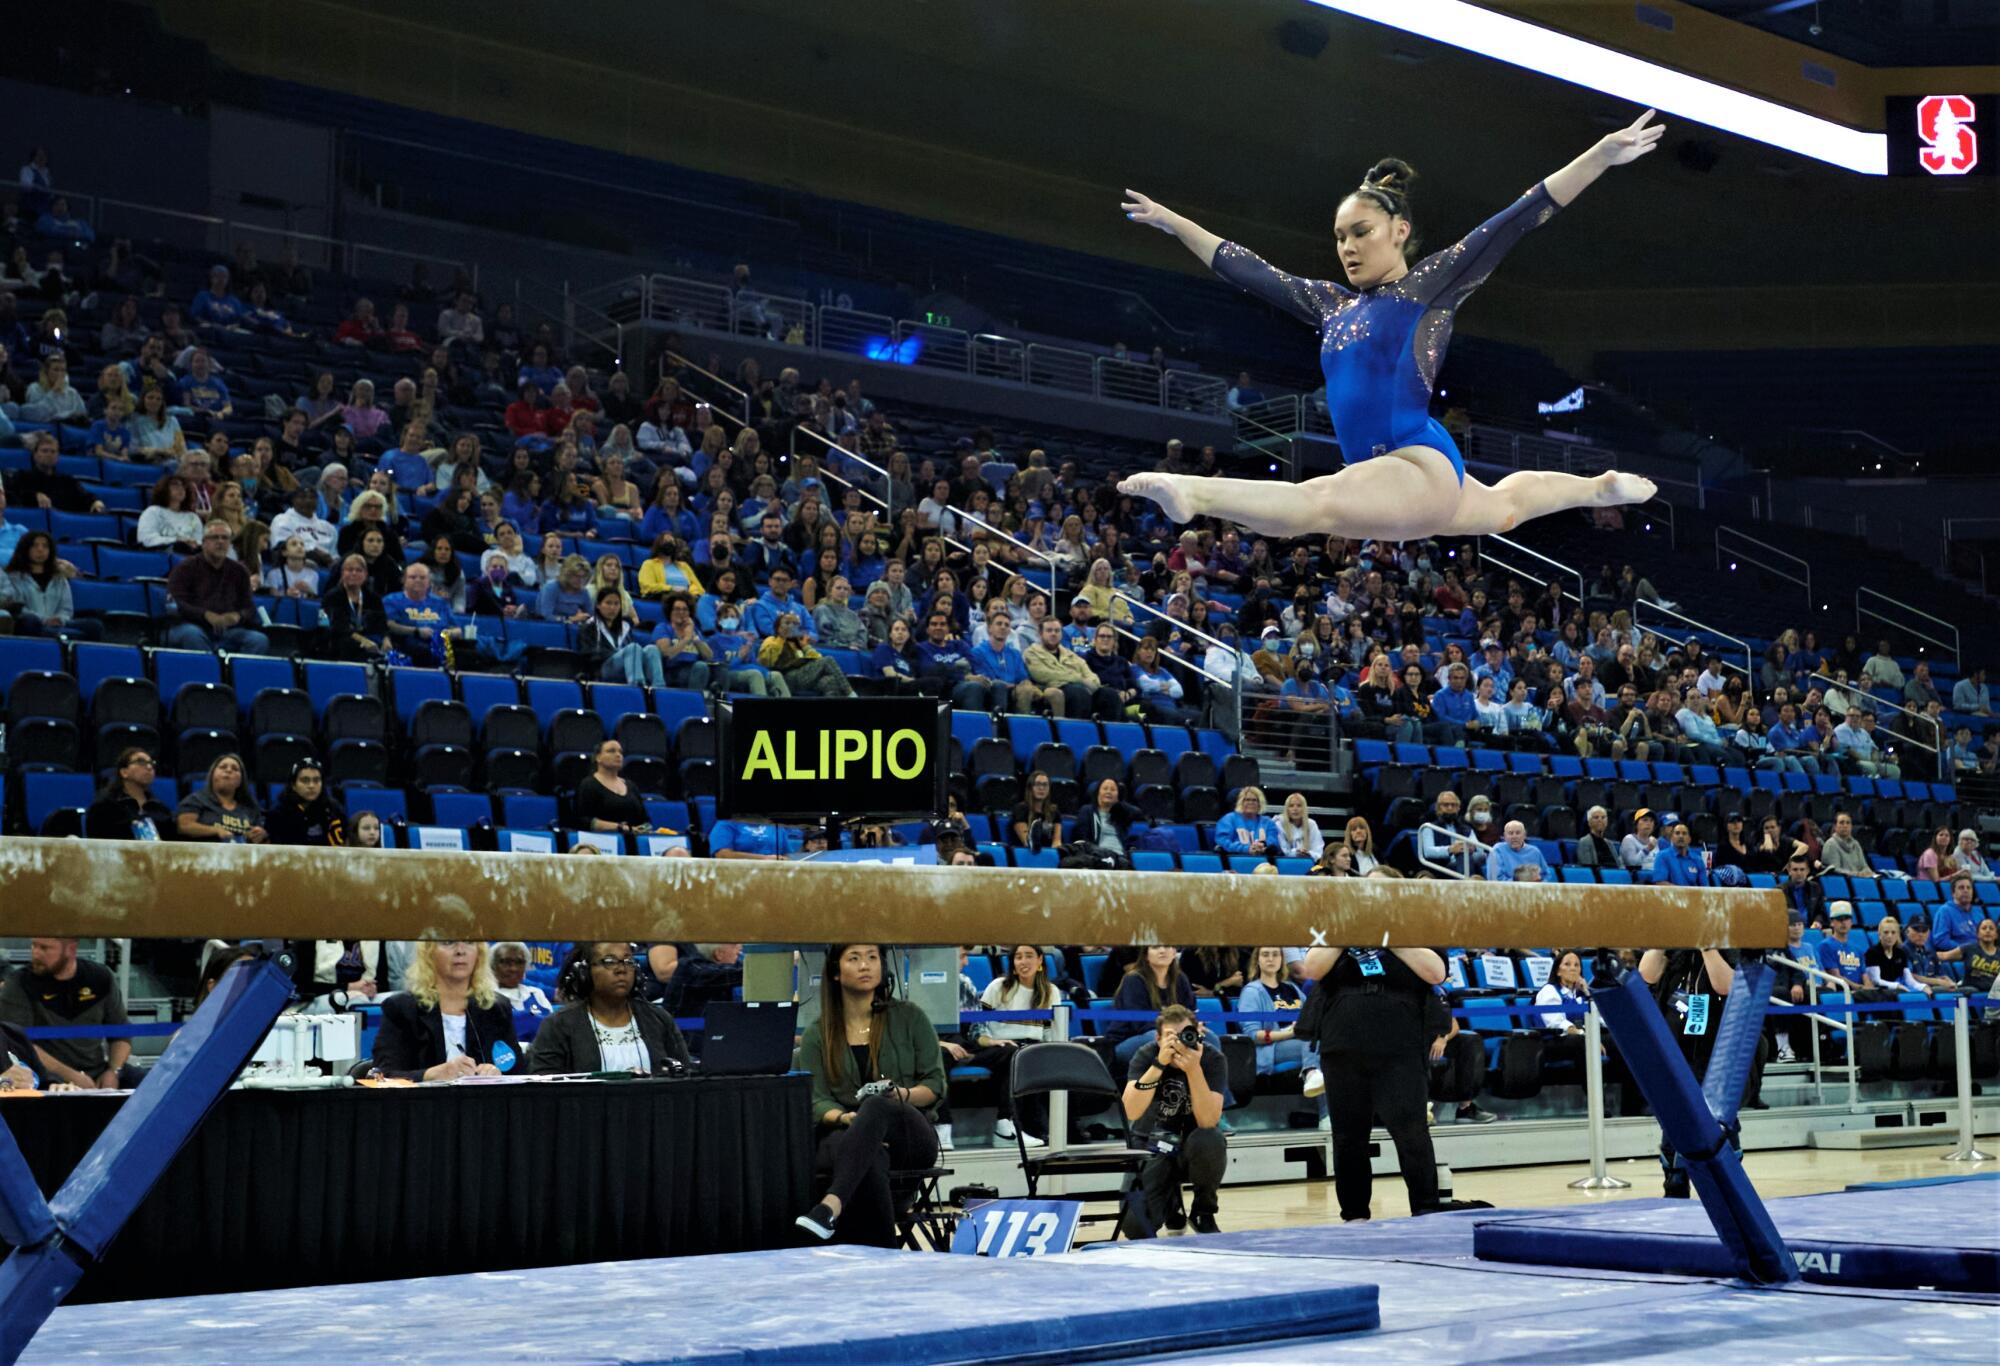 UCLA gymnast Alipio Ciena competes on the balance beam during the NCAA regionals at Pauley Pavilion